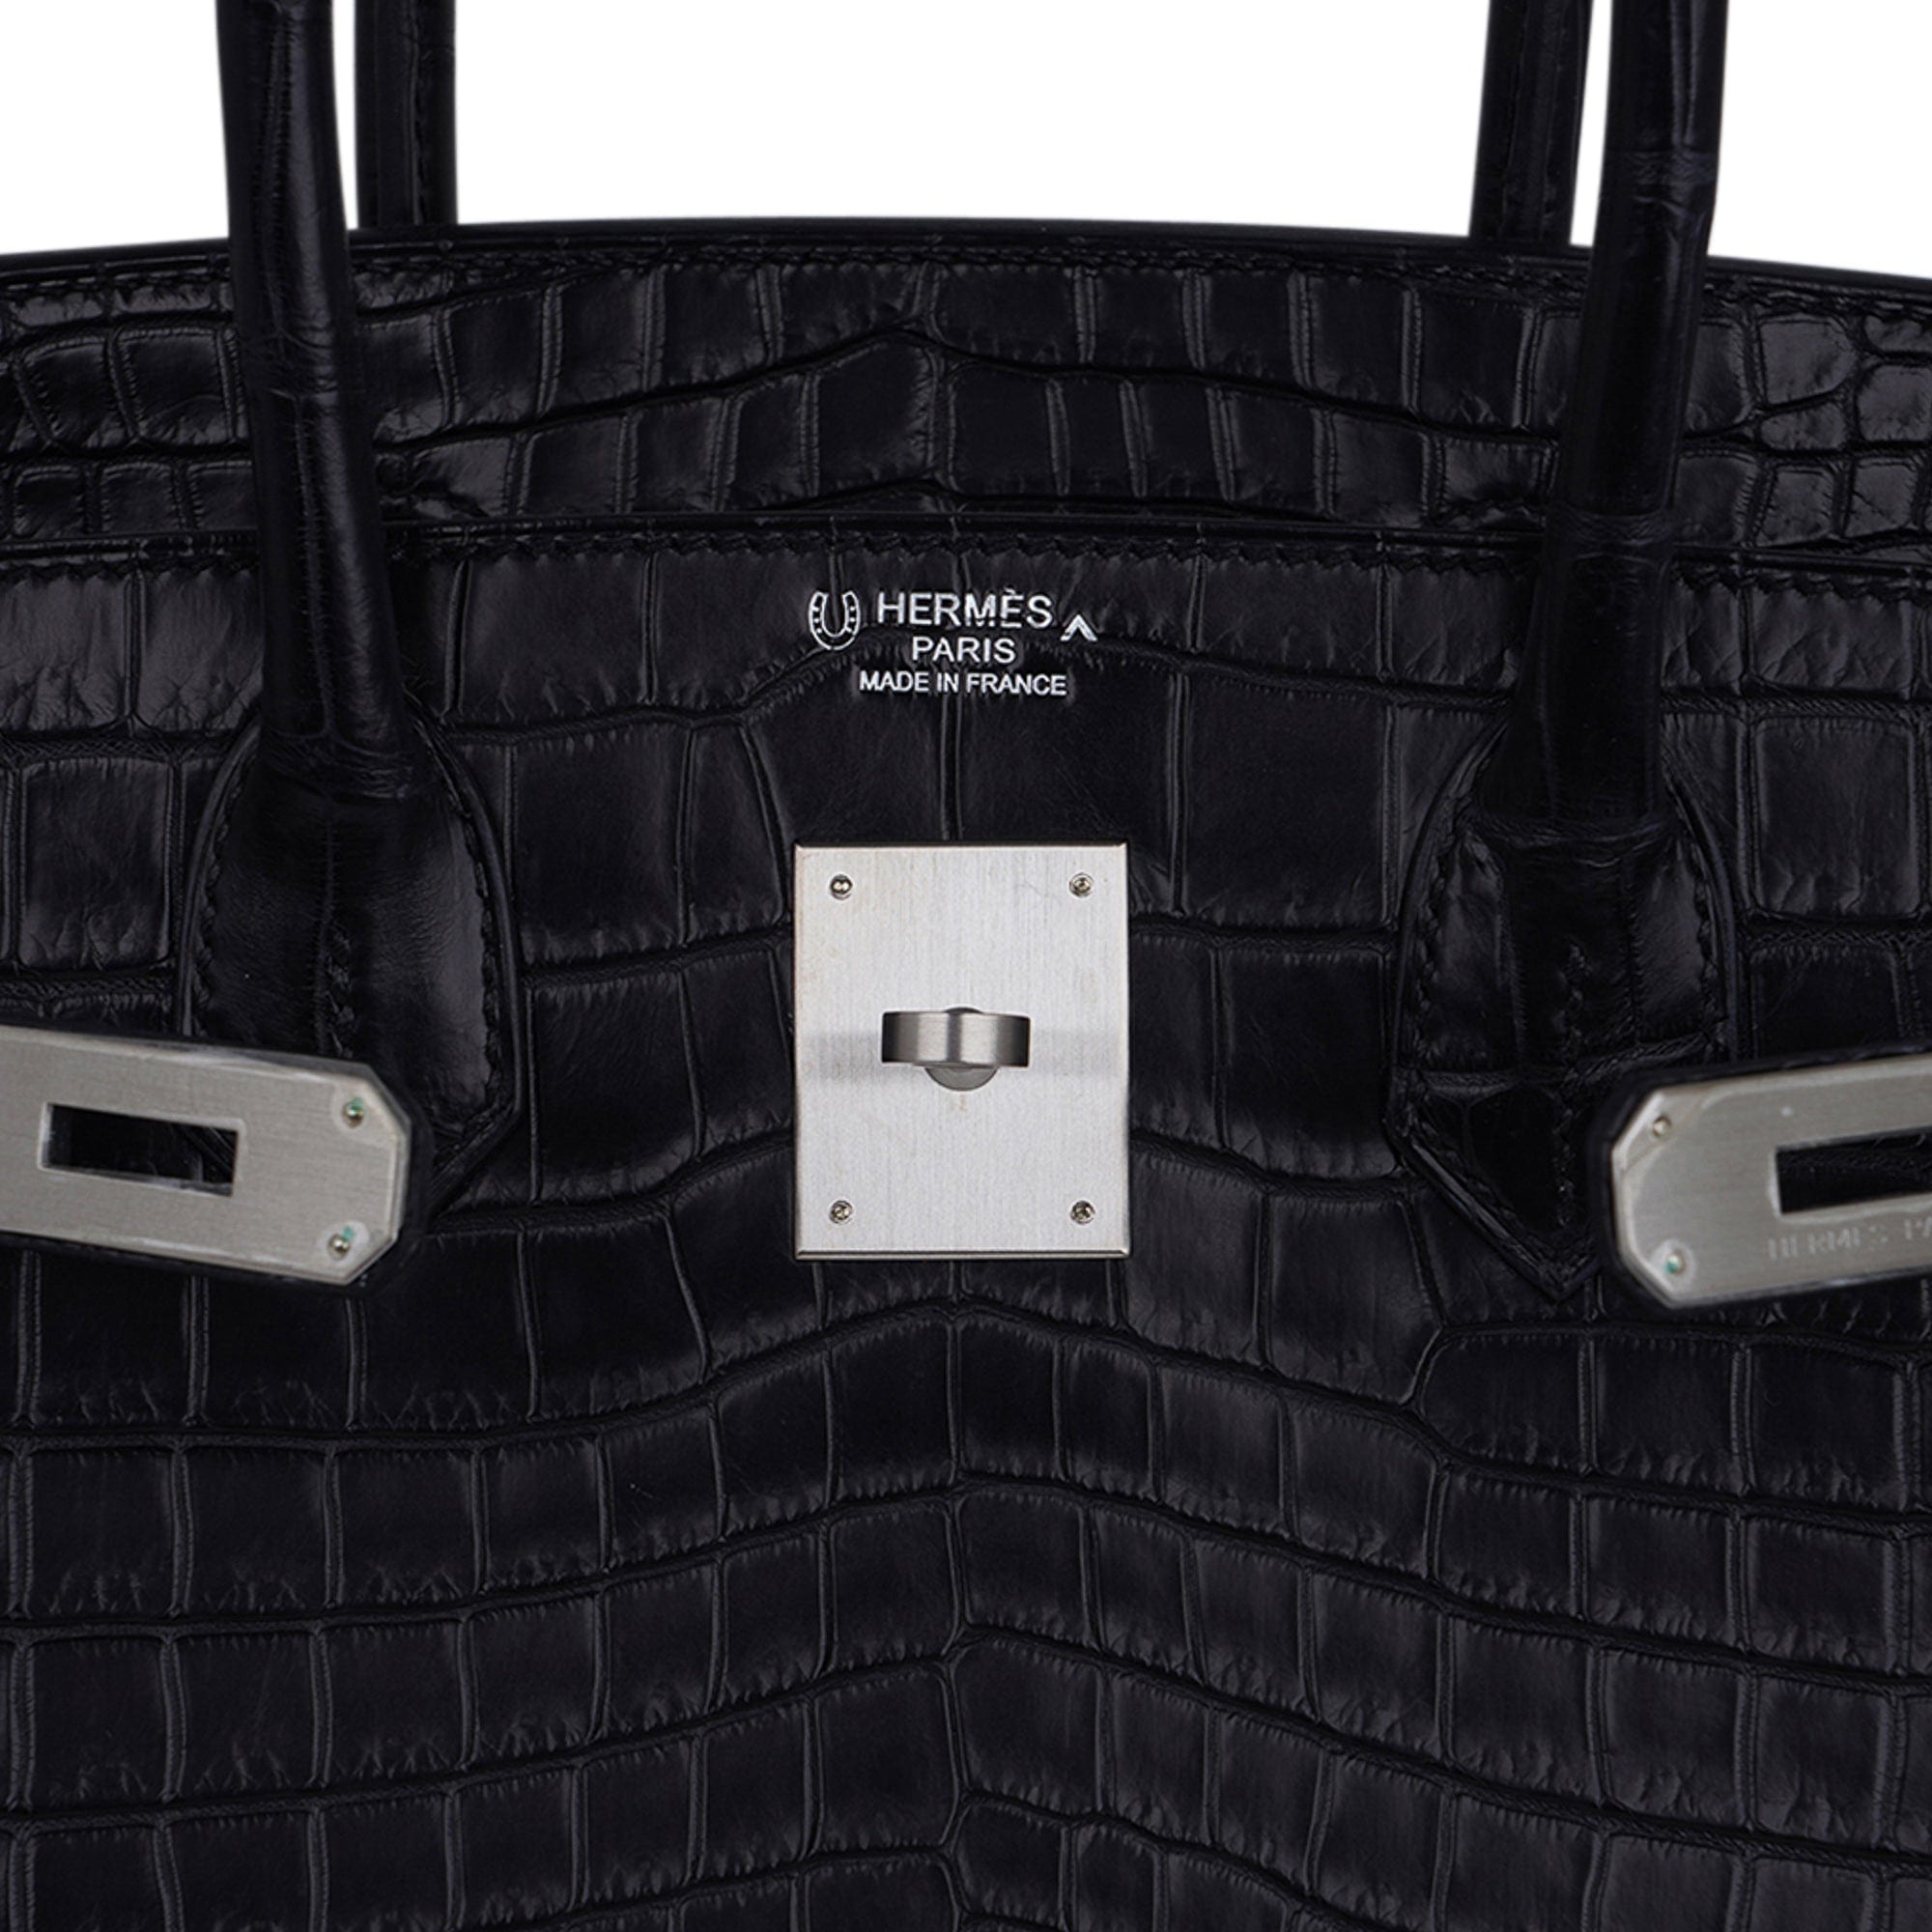 Hermès Birkin 30 Porosus Crocodile Bag Handbag New